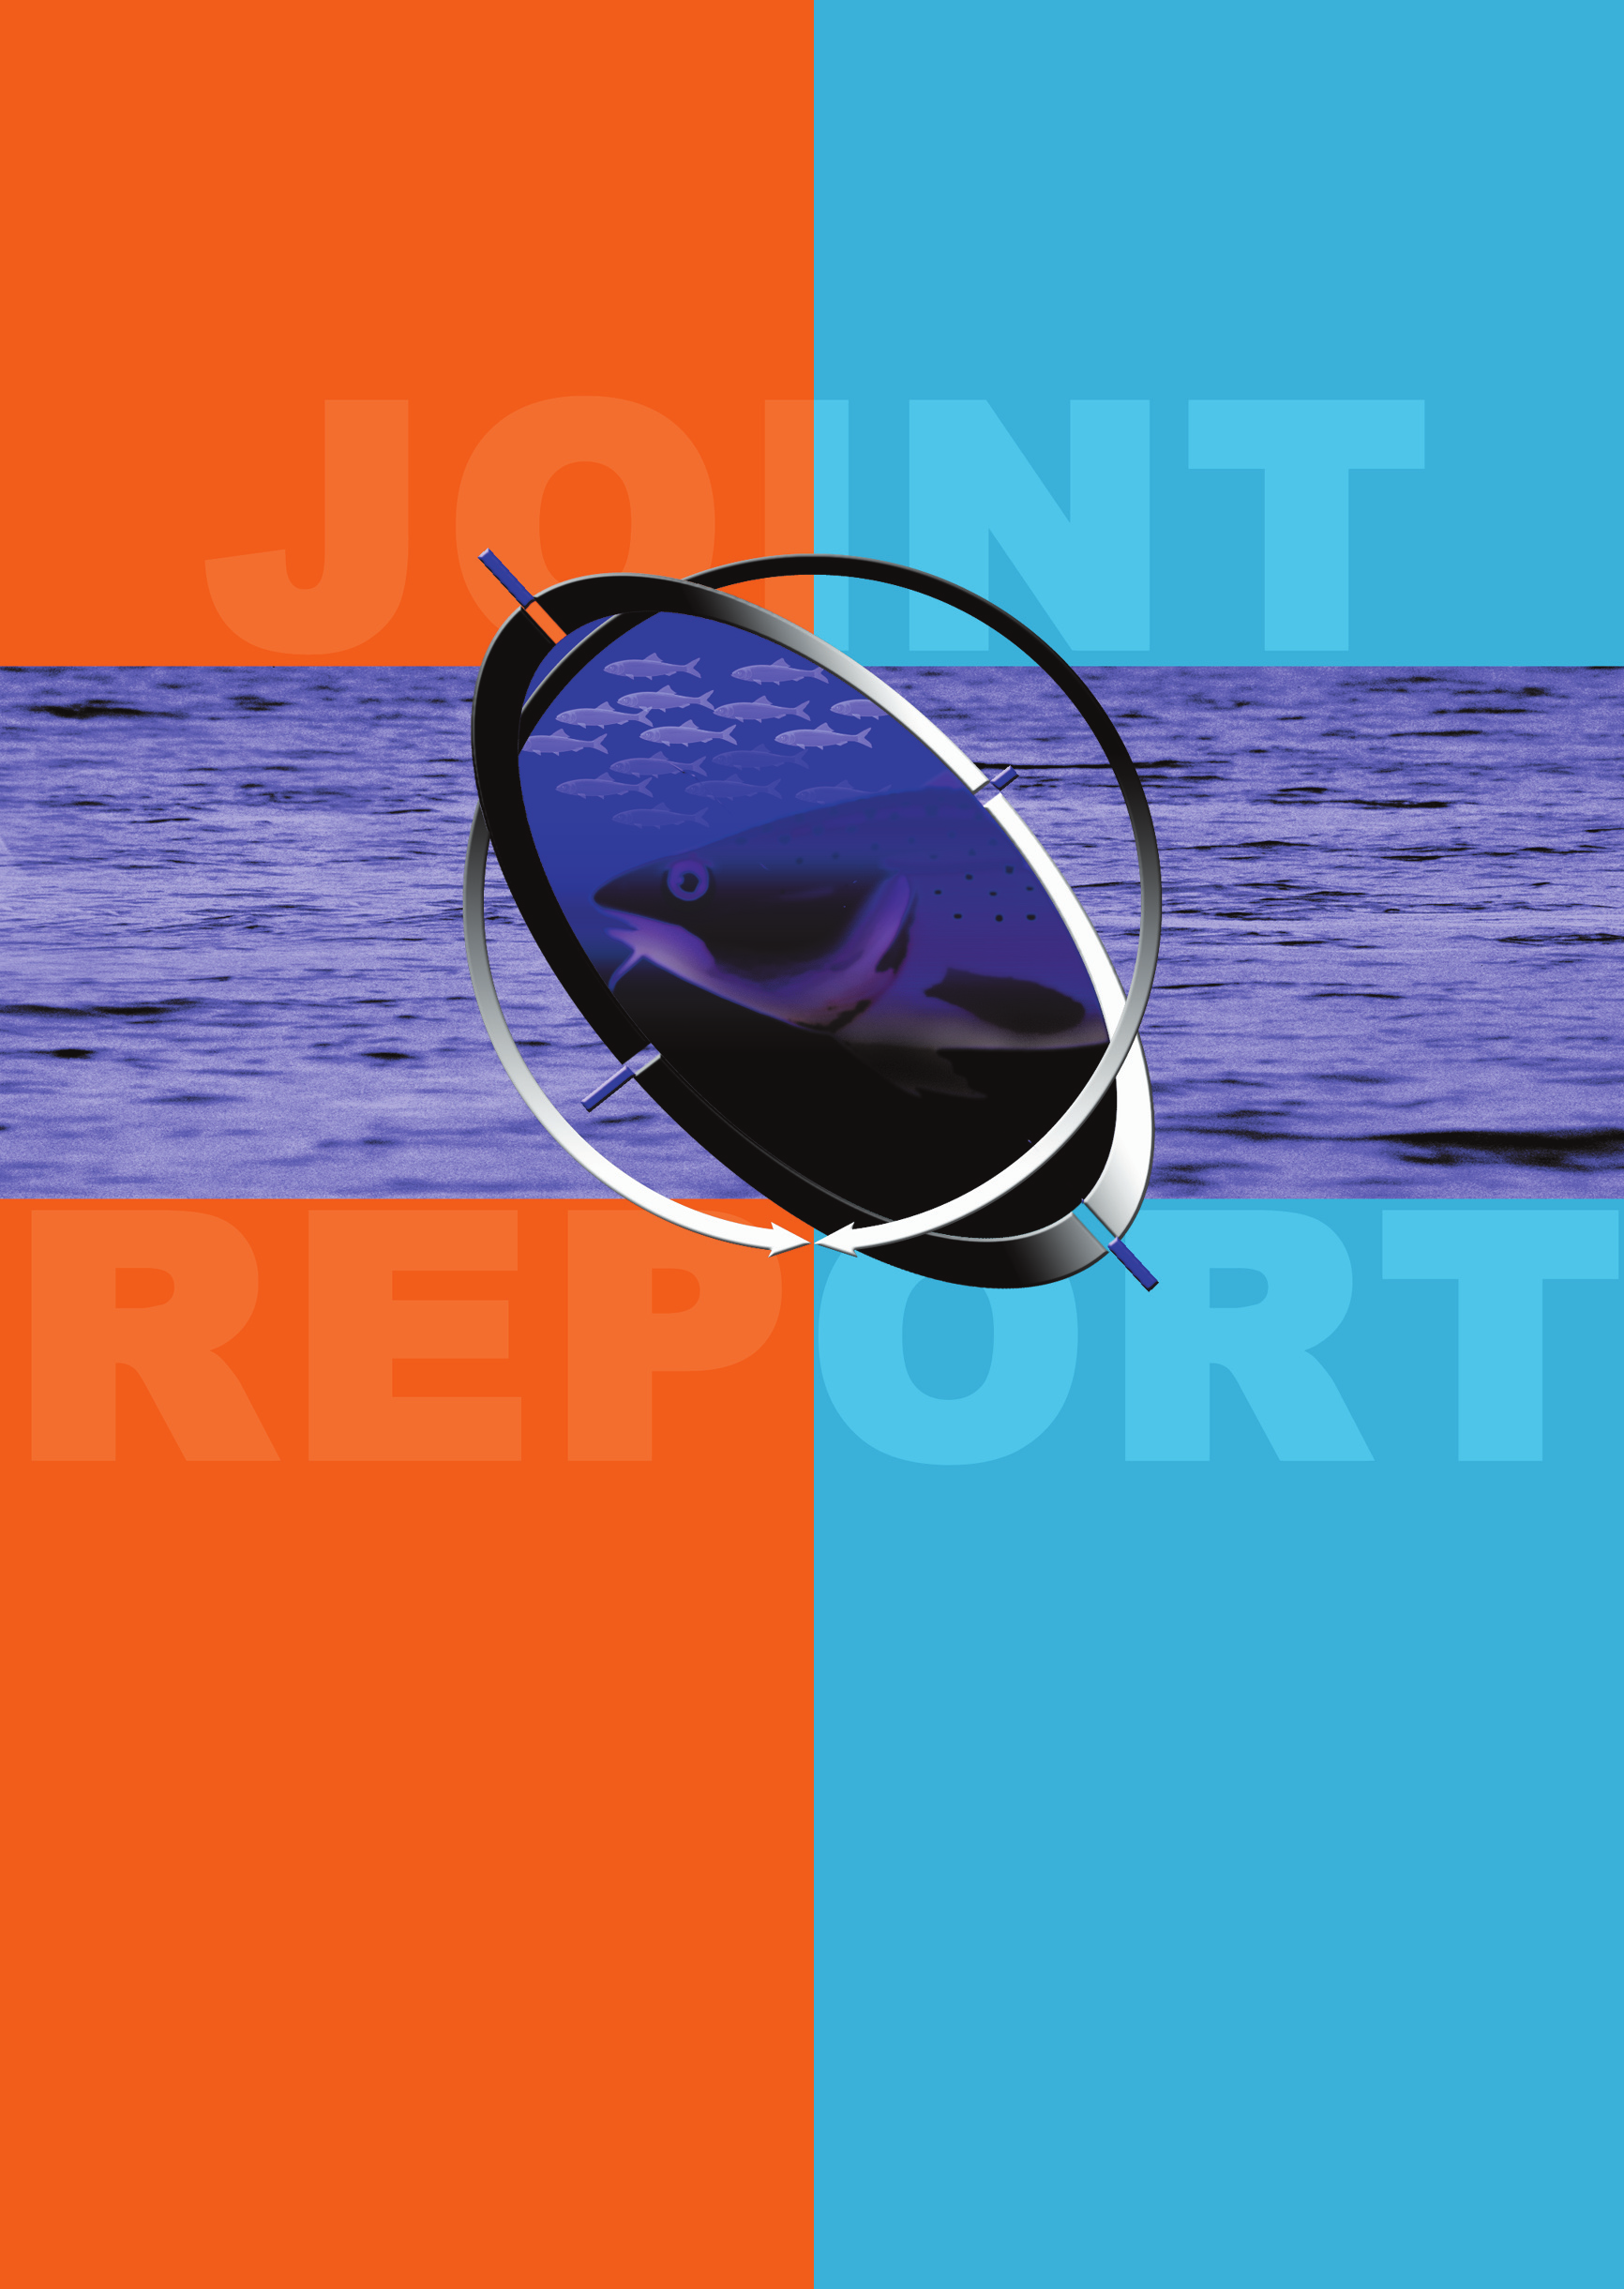 T E P O R T IE R E IN JO R 5 S I M R / PI NRO S INVESTIGATIONS ON DEMERSAL FISH IN THE BARENTS SEA WINTER Detailed report BOTNFISKUNDERSØKINGAR I BARENTSHAVET VINTEREN Detaljert rapport Asgeir